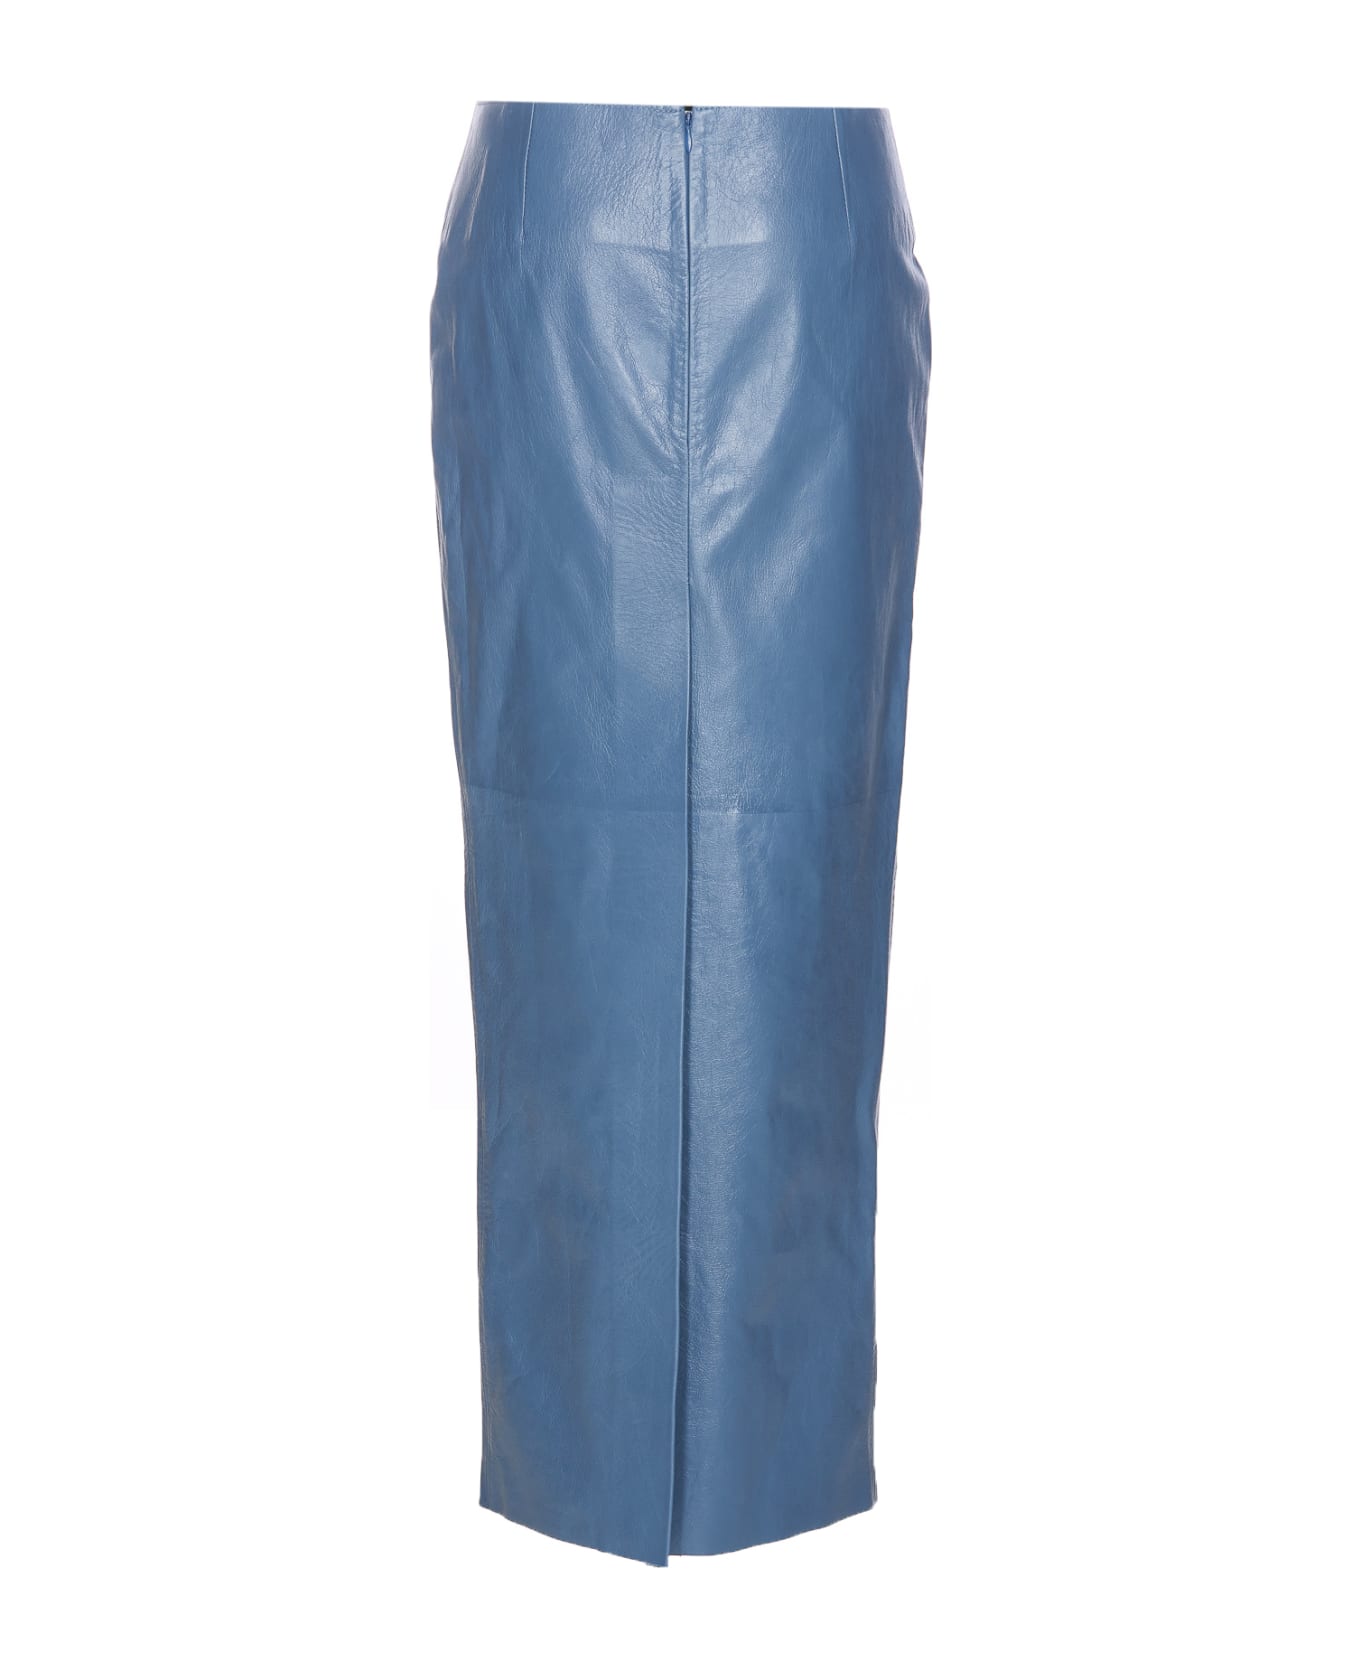 Marni Leather Skirt - 00B37 スカート